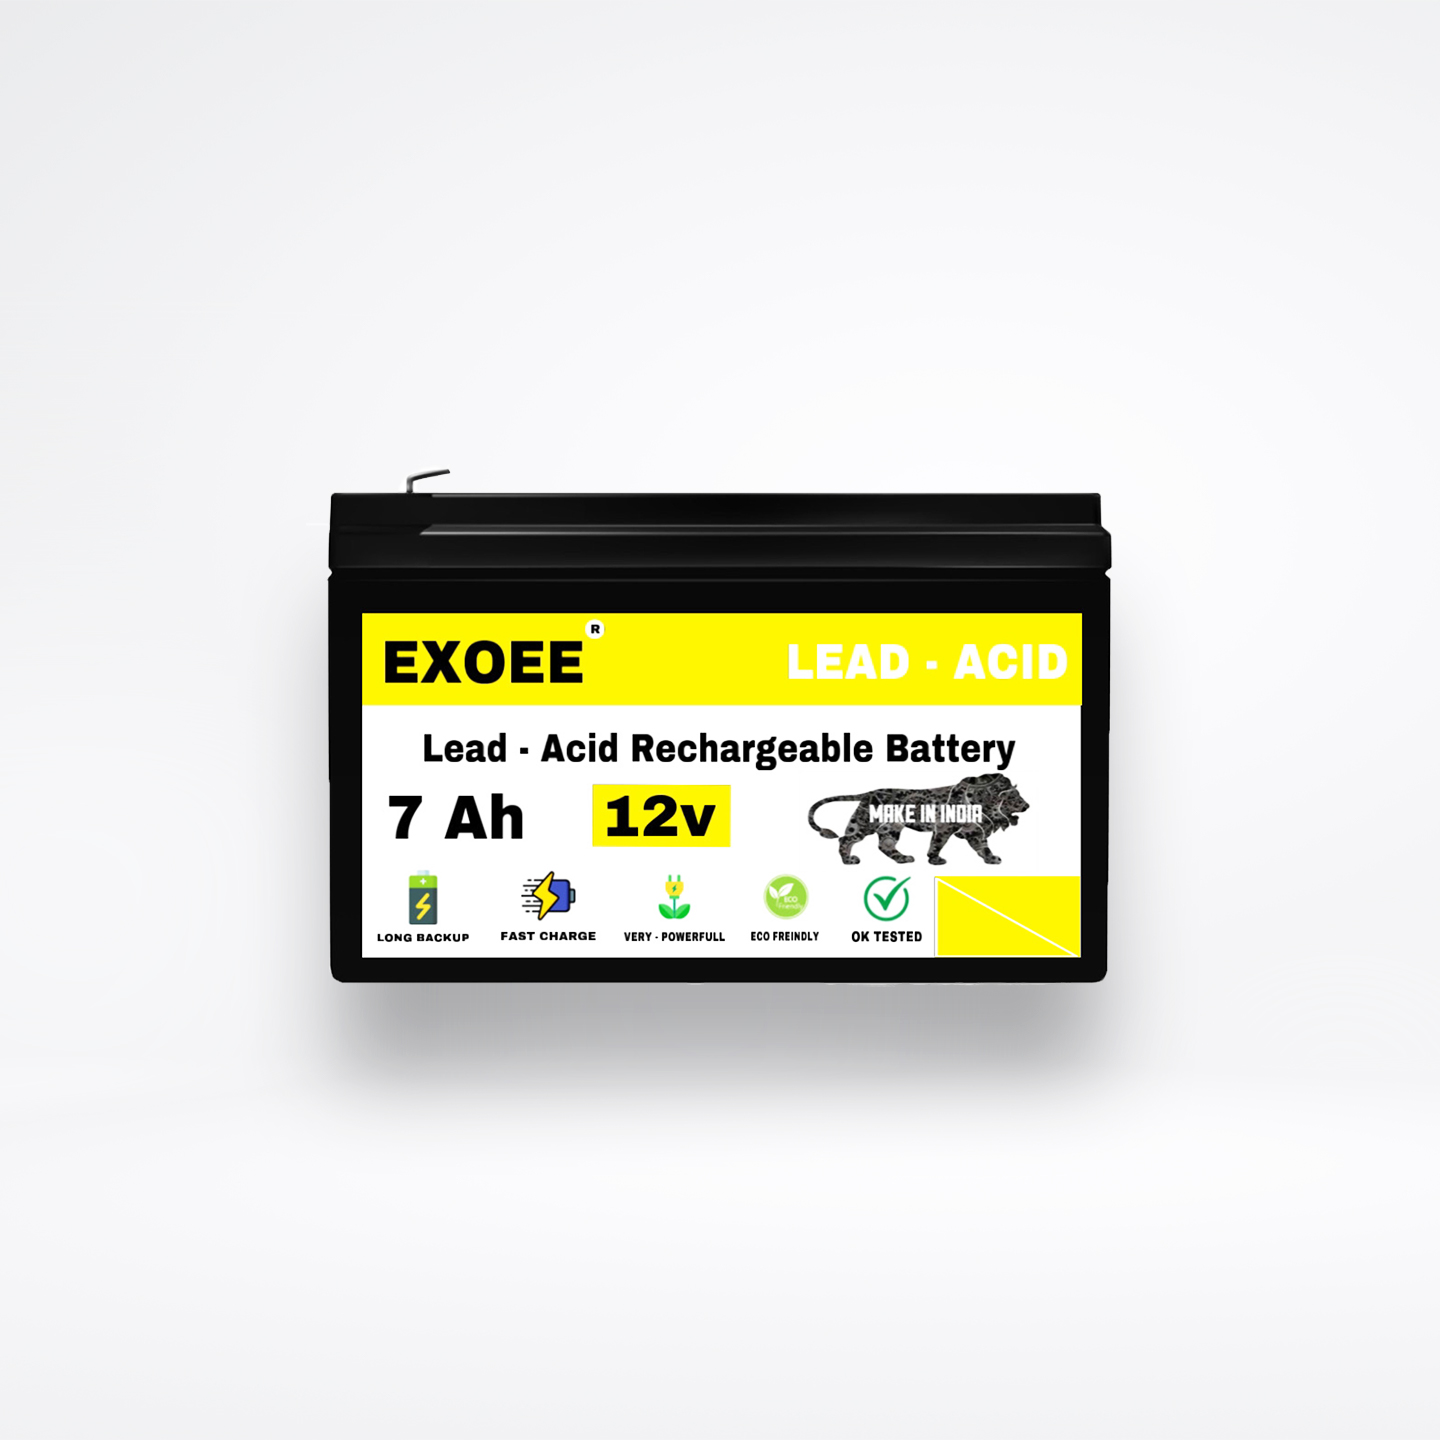 12 volt exoee battery-1714238153.jpg